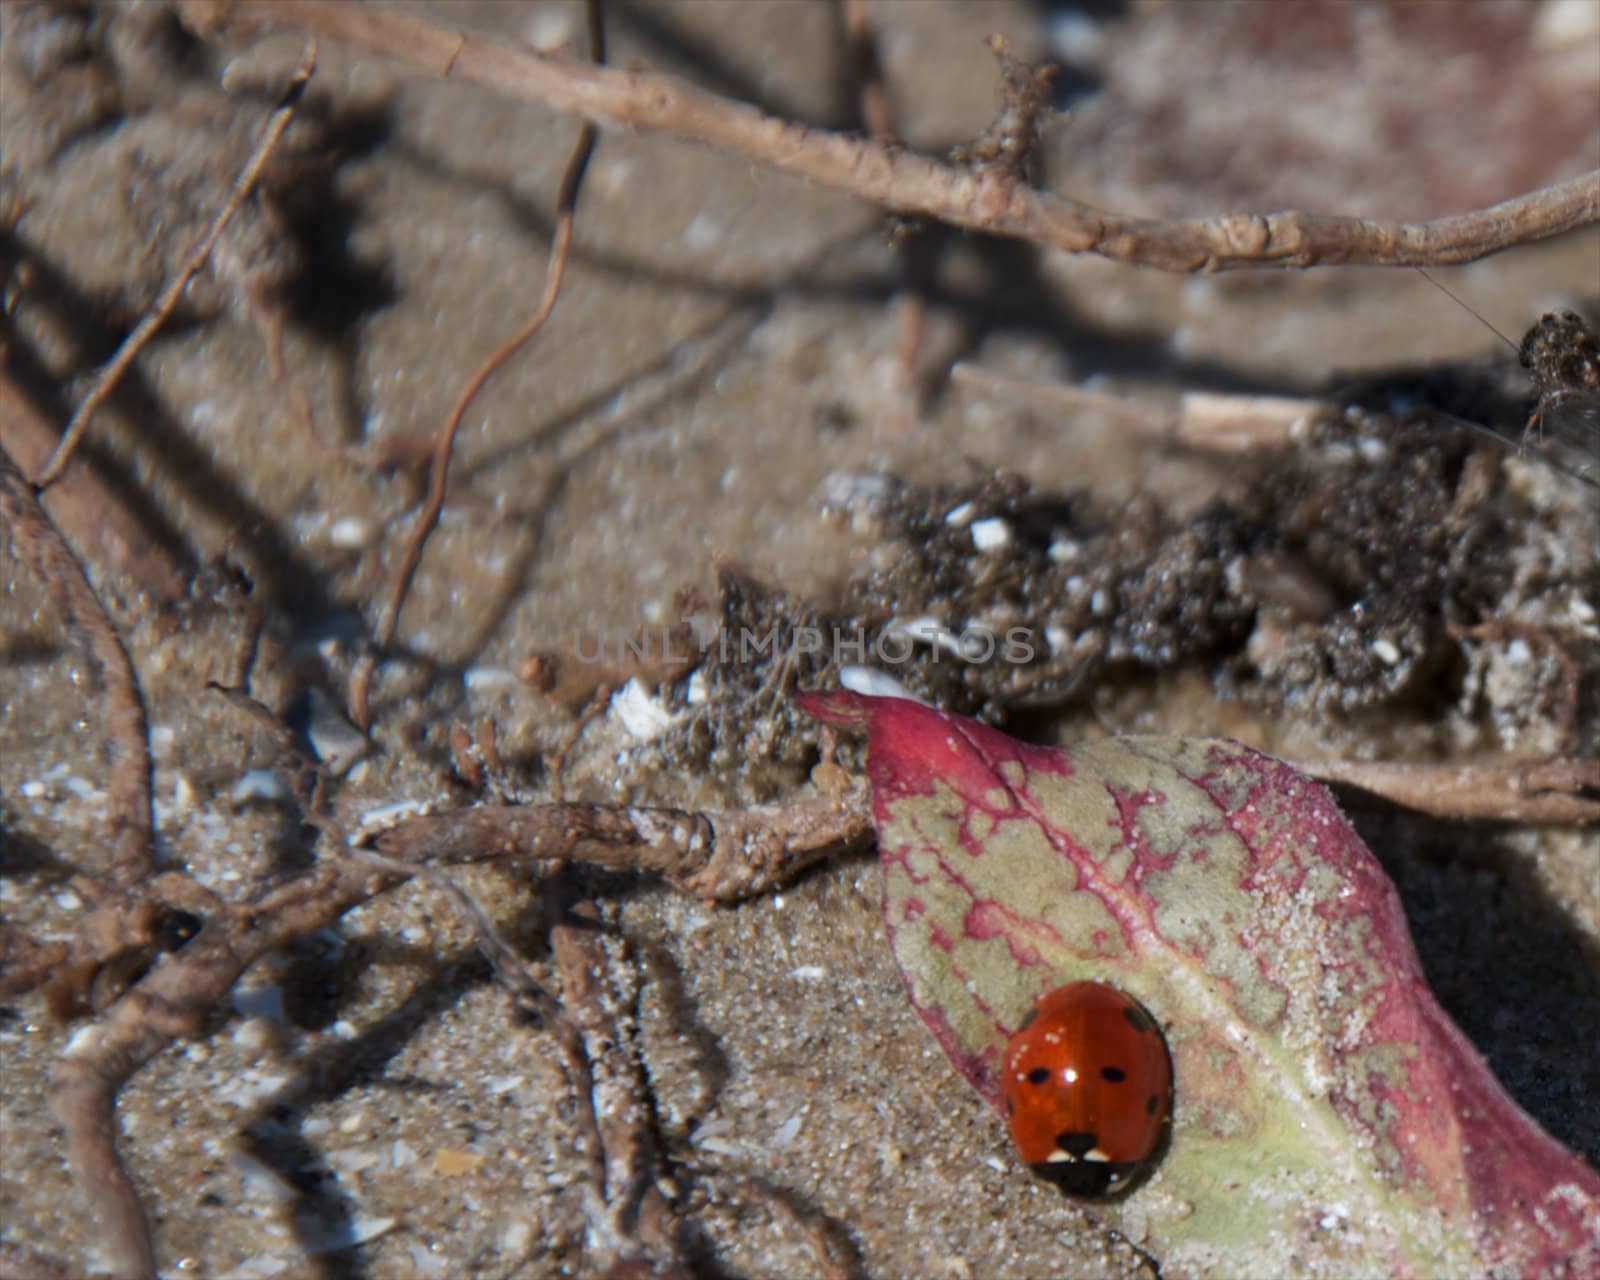 A ladybug on a leaf on a beach.